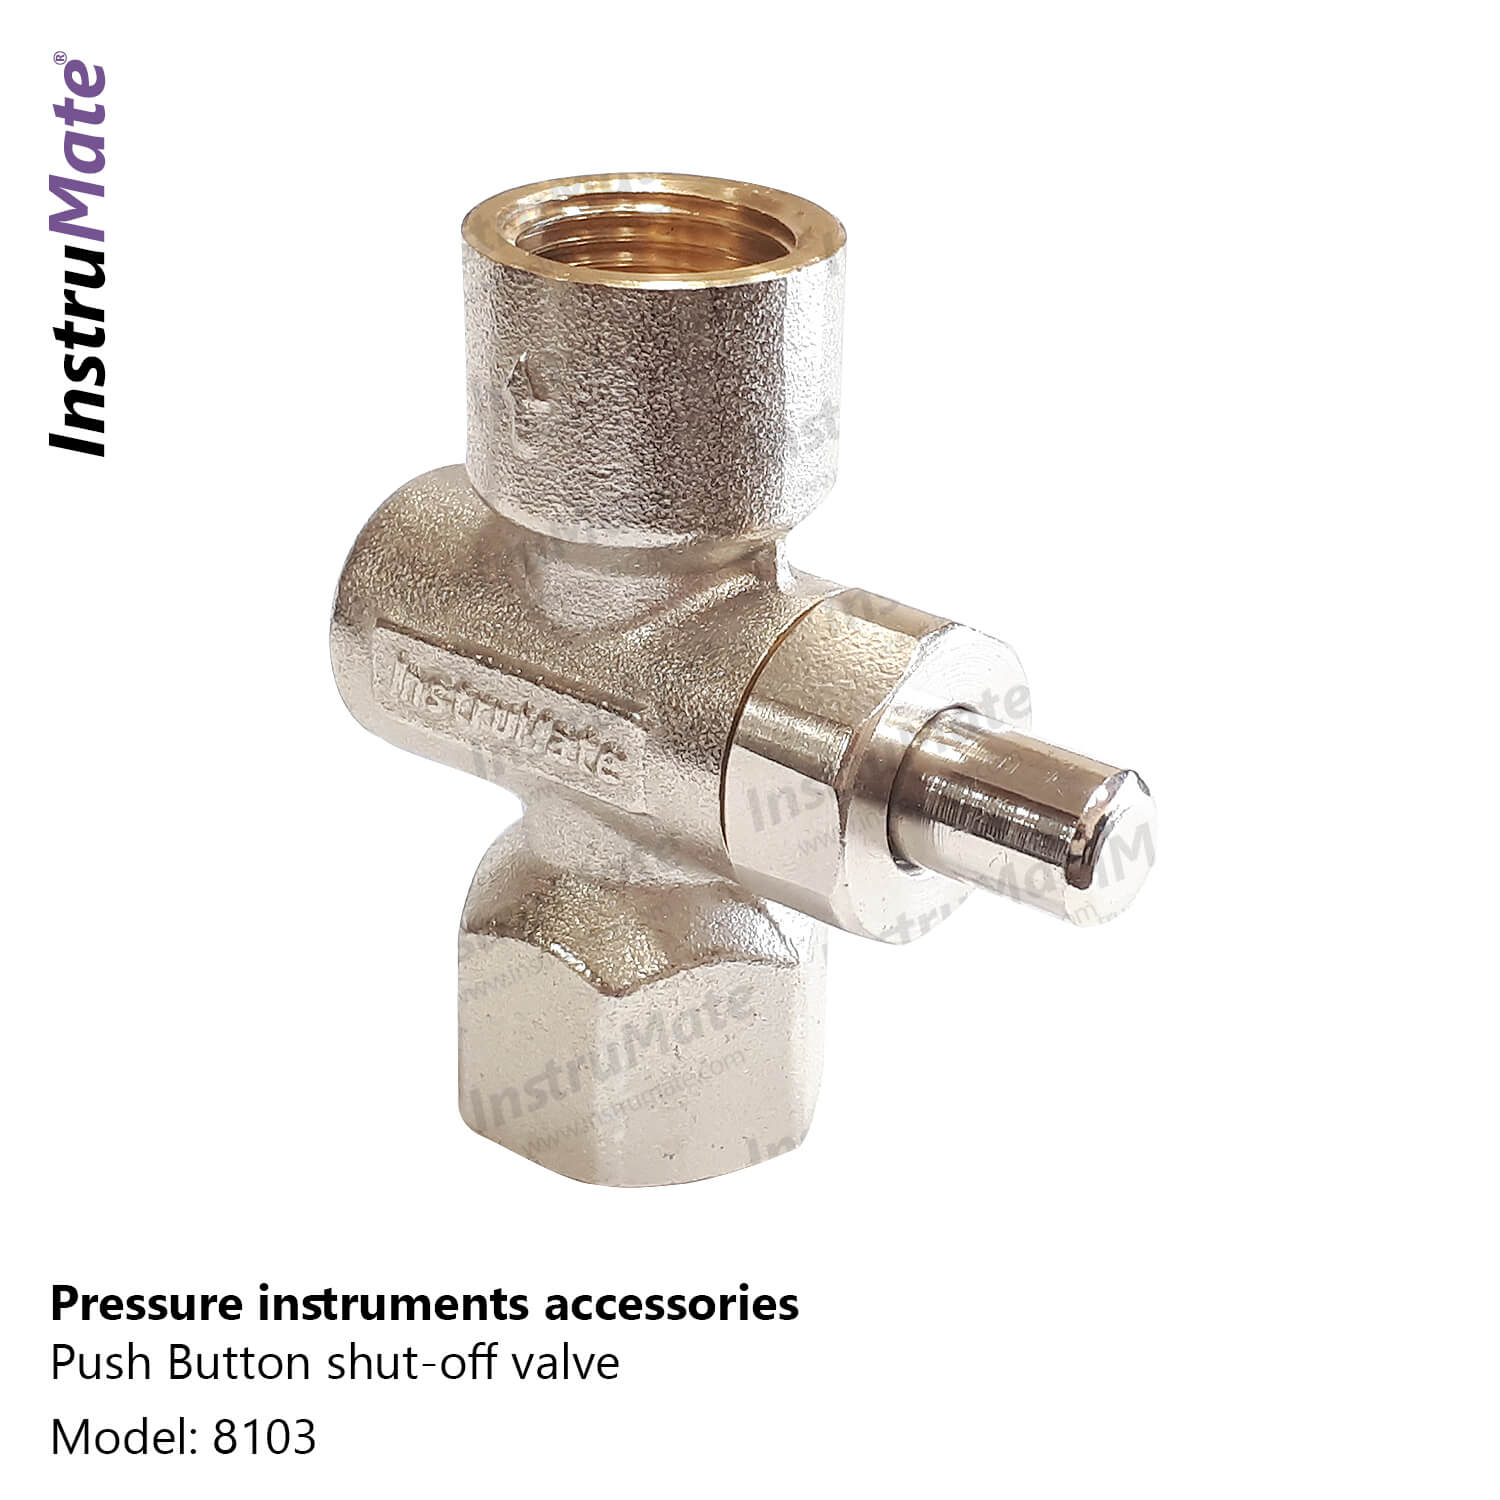 Push button shut-off valve - 8103 - Instrumate